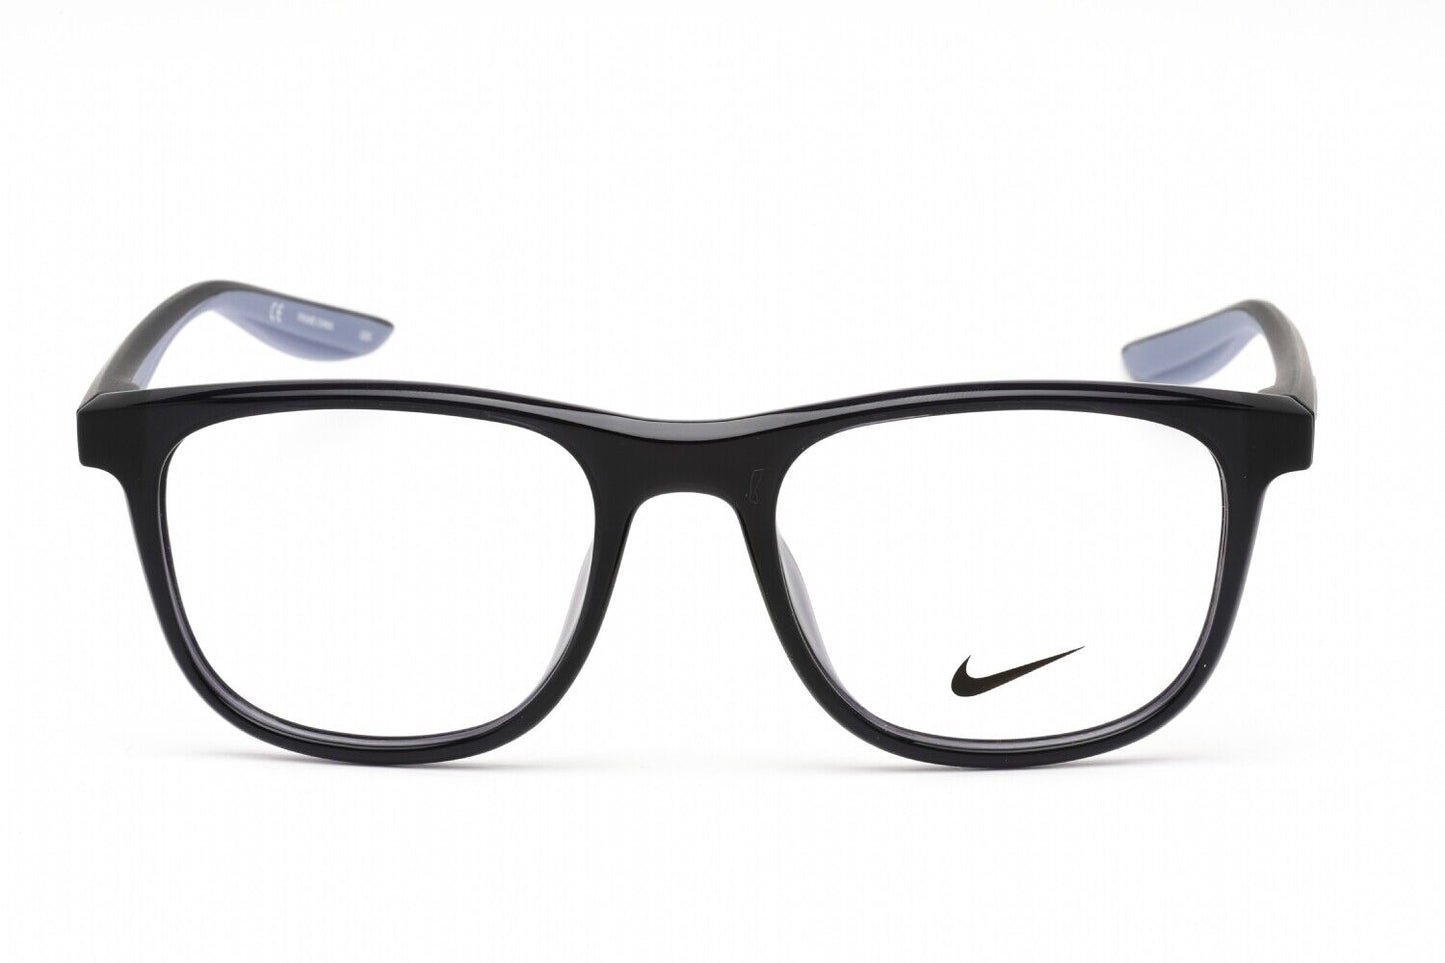 Nike 7037-501-5118 51mm New Eyeglasses